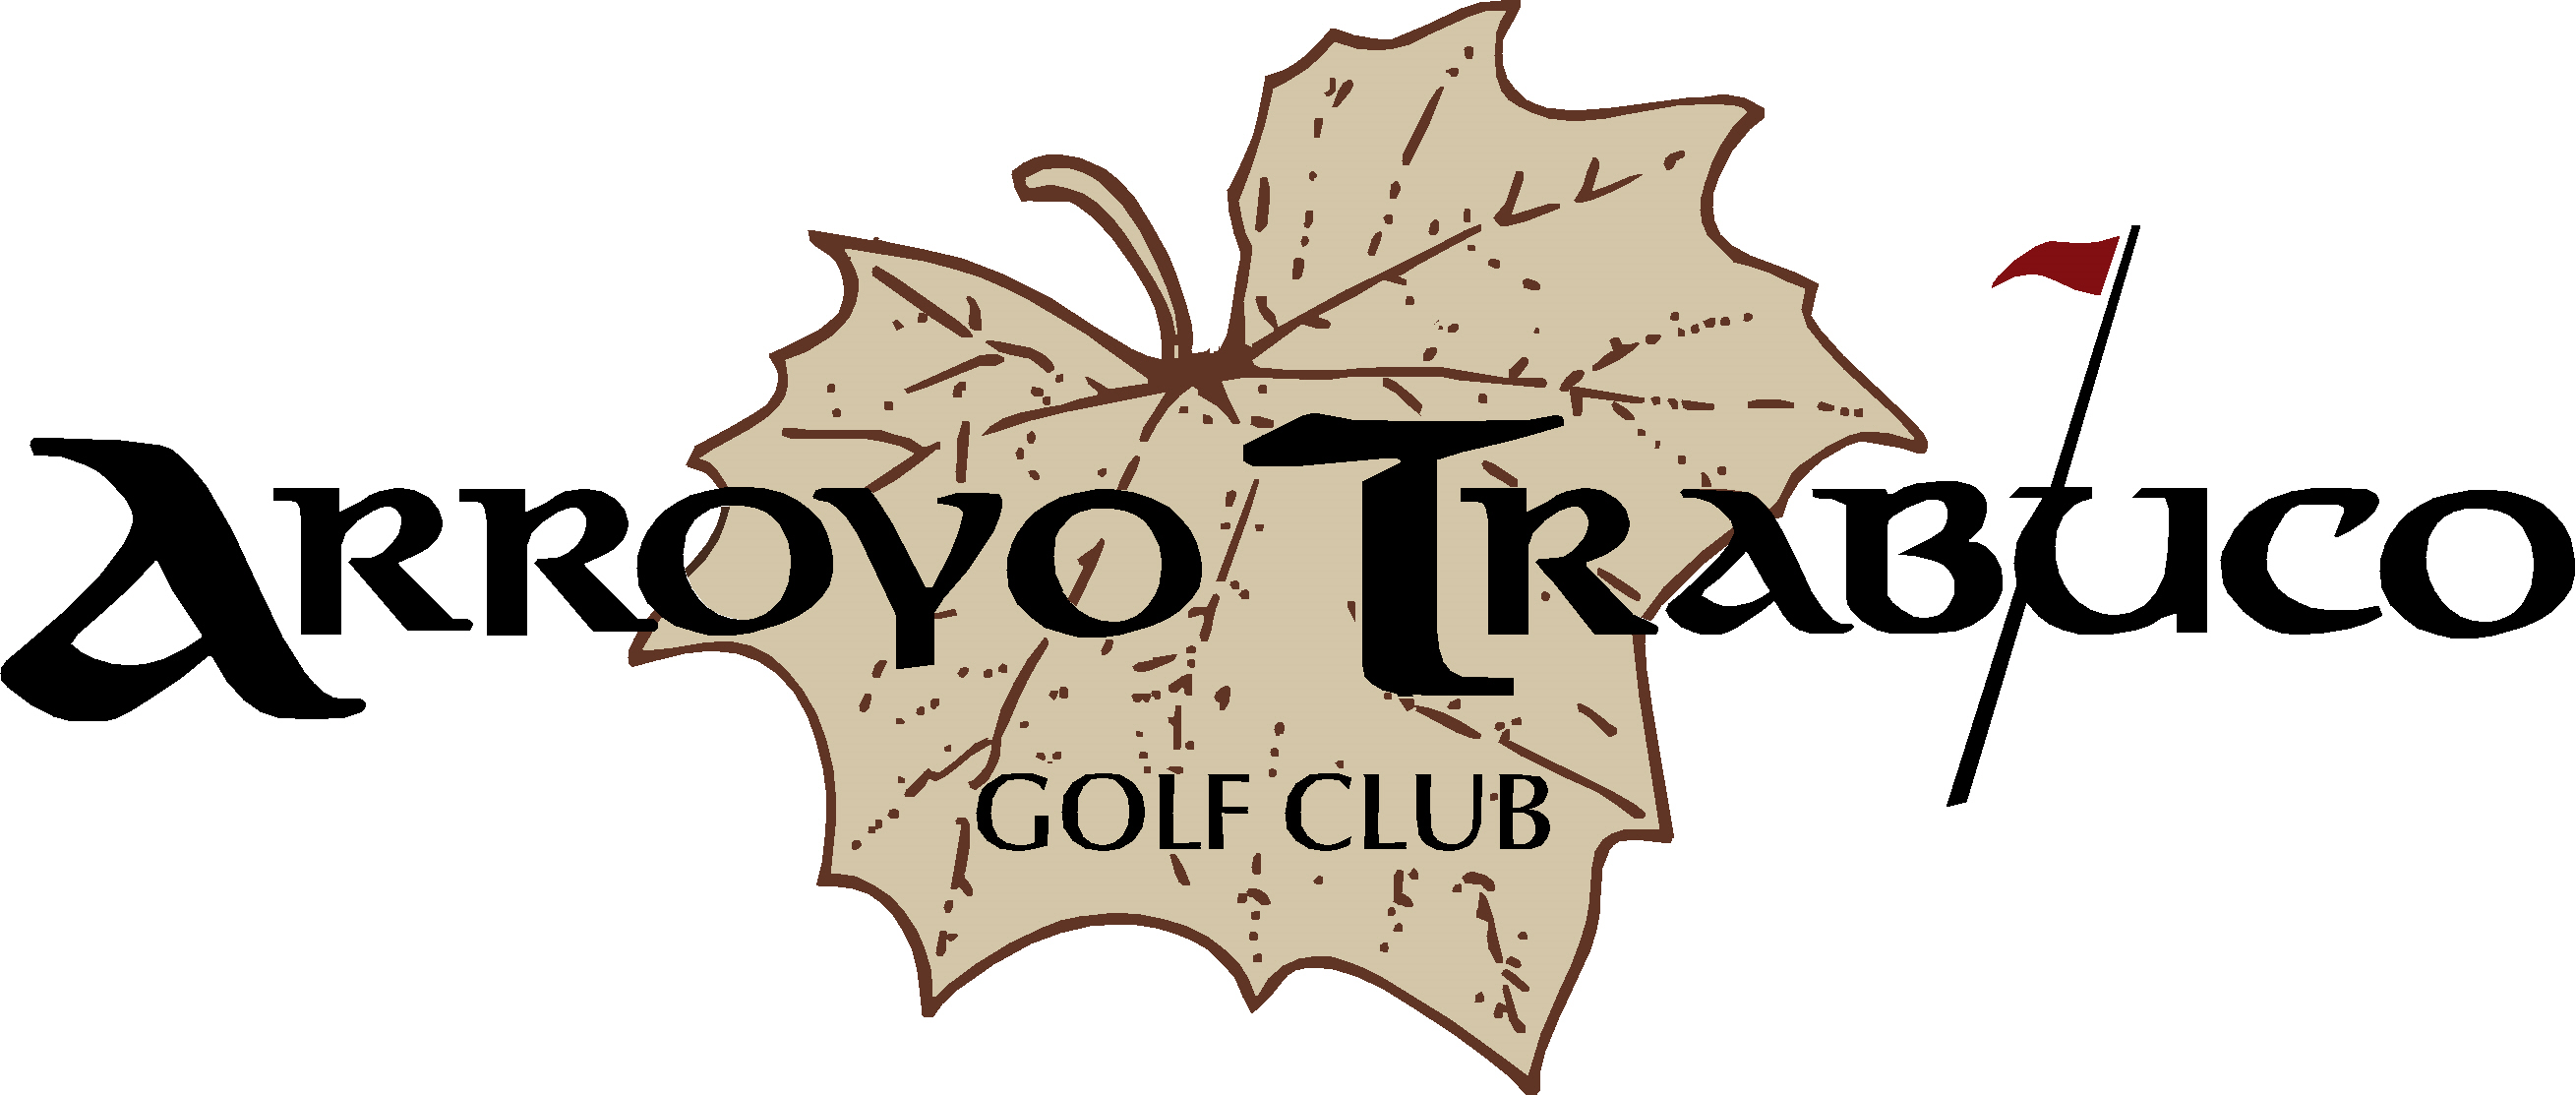 Arroyo Trabuco Golf Club Company Logo